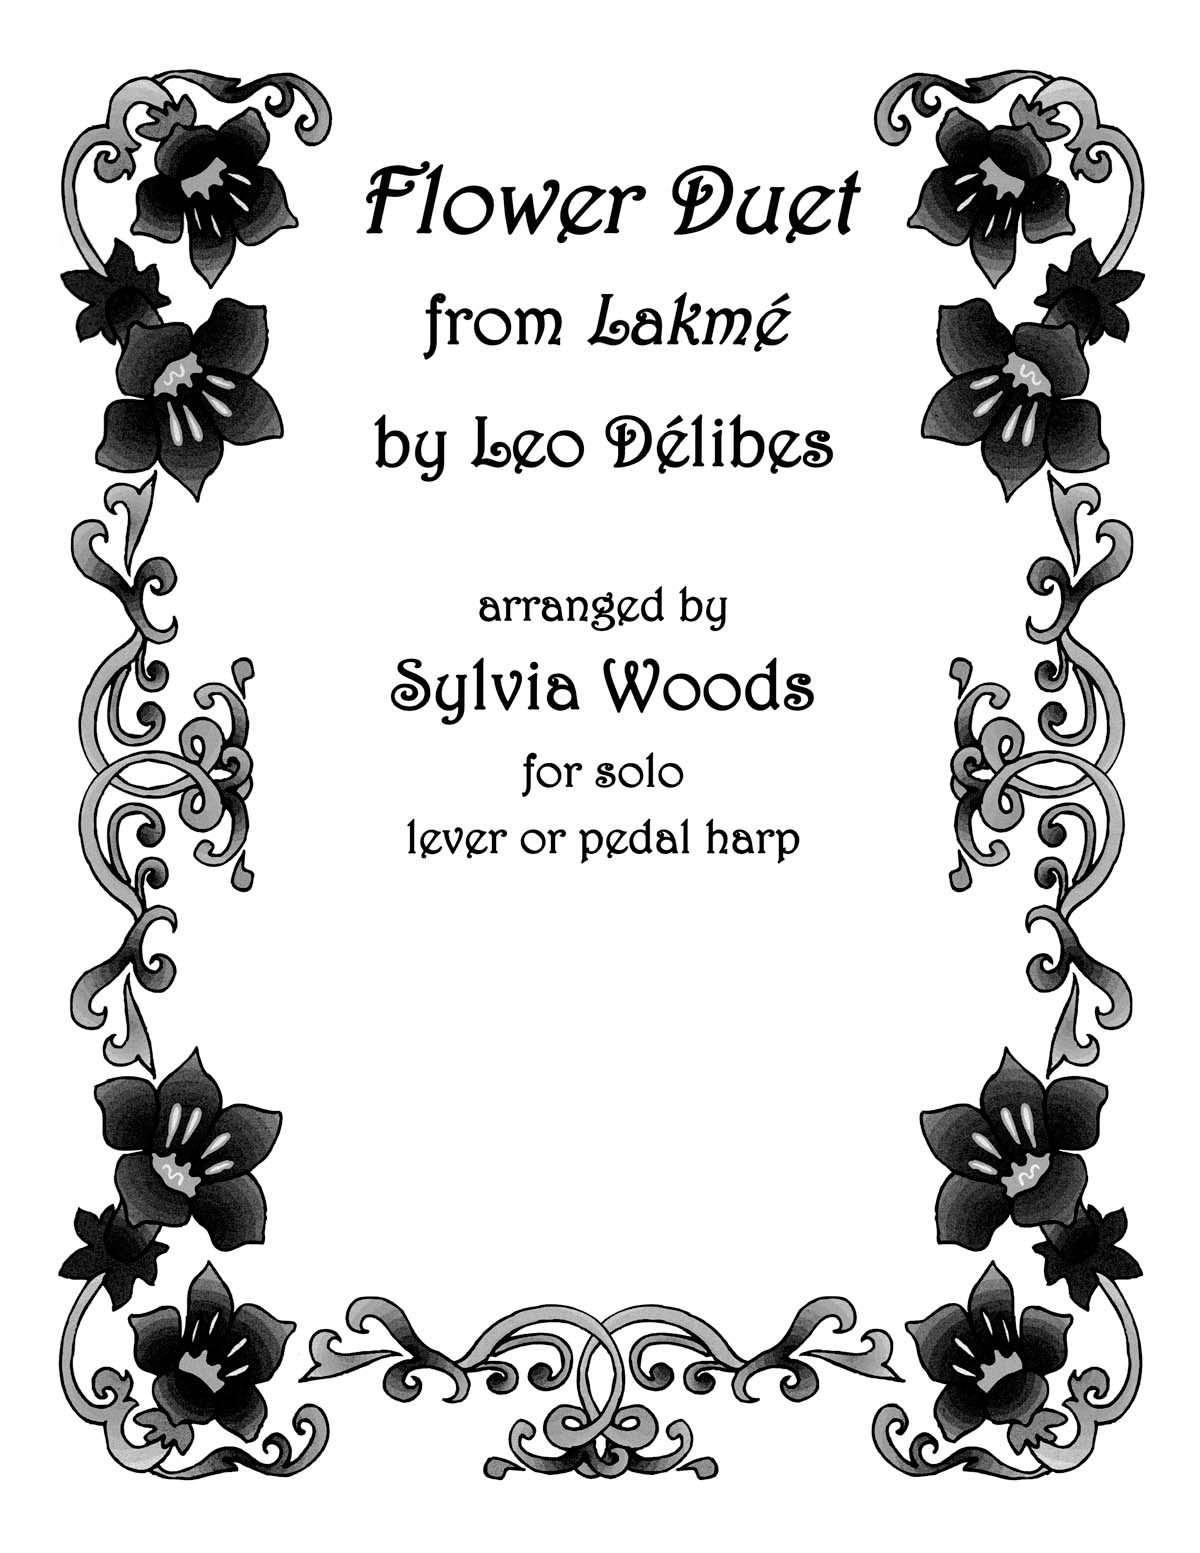 Leo Delibes: Flower Duet From Lakeme